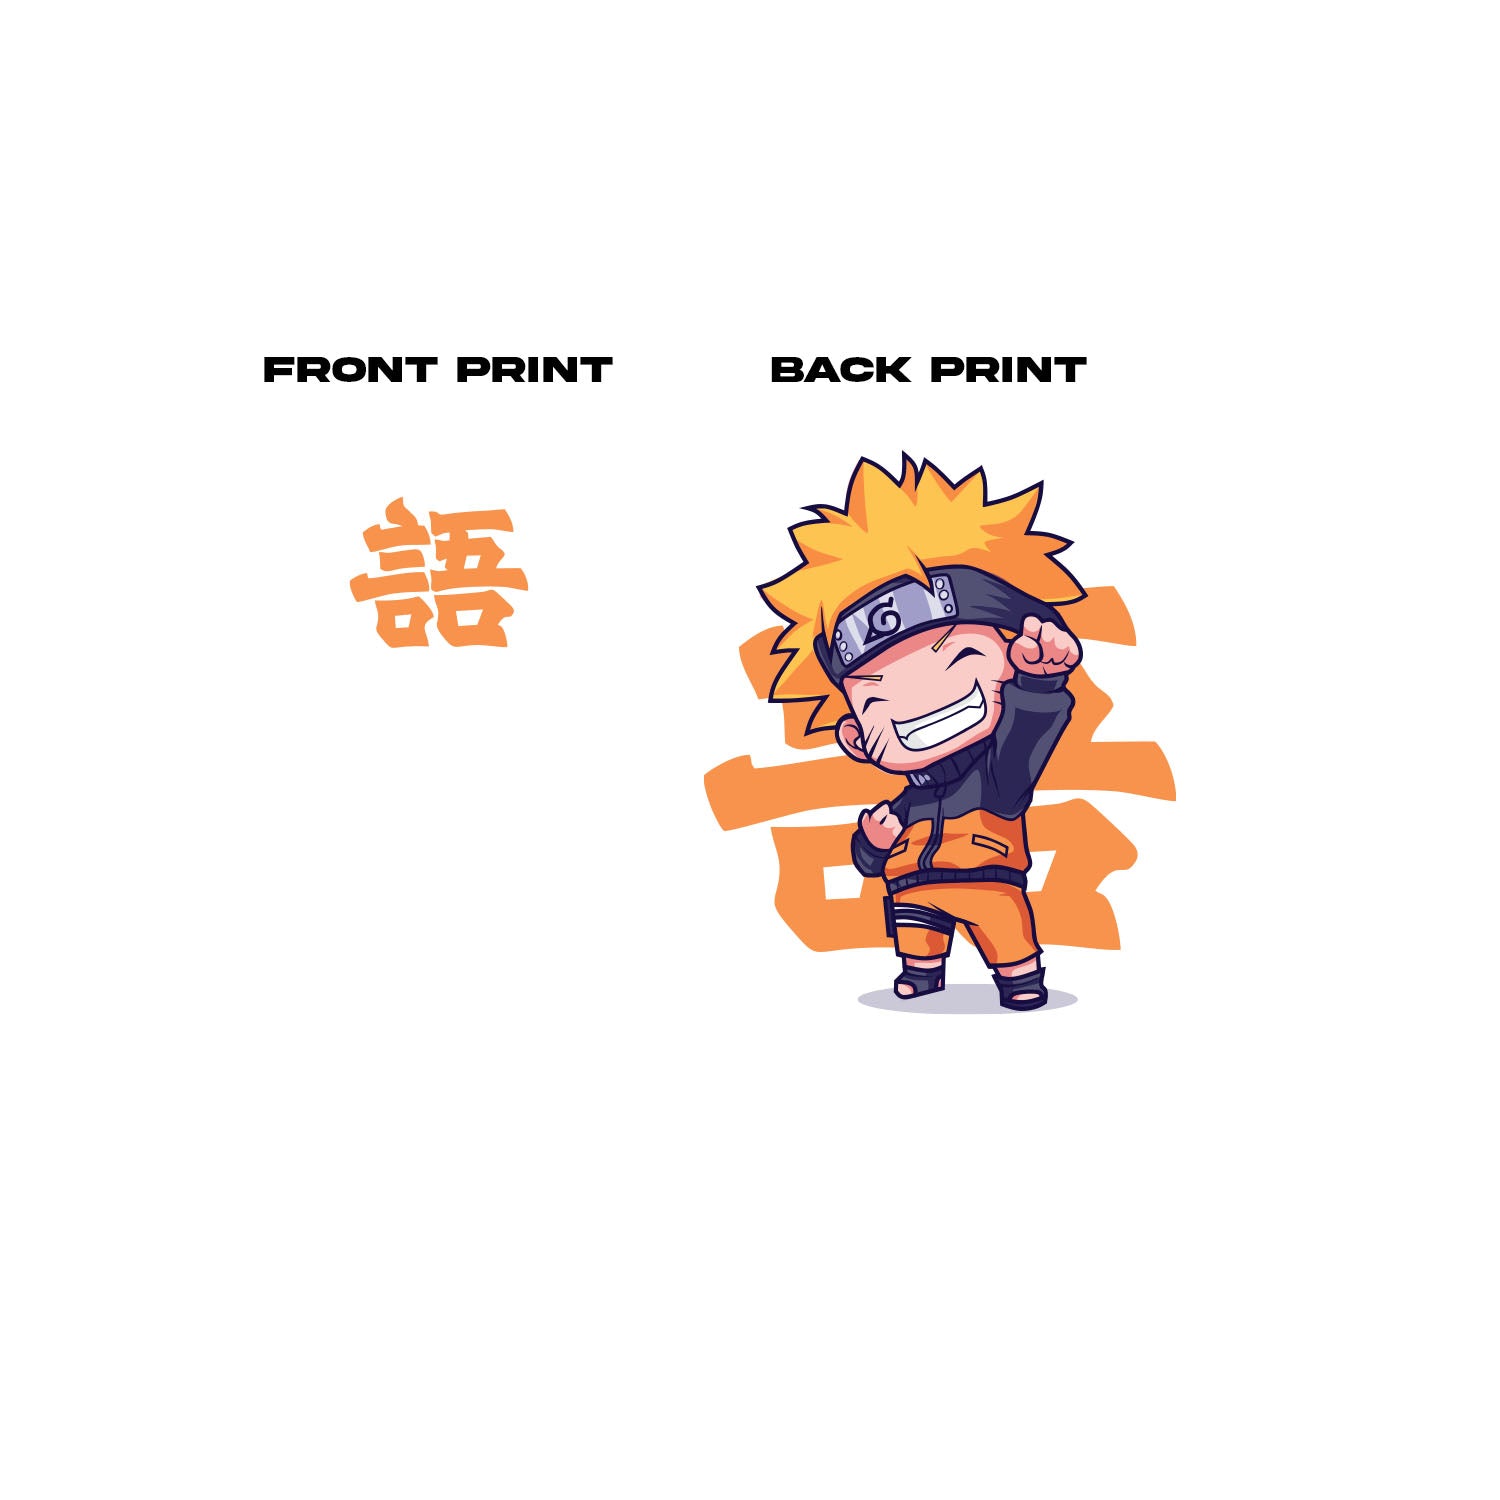 Naruto Graphic Printed Oversized T-Shirt